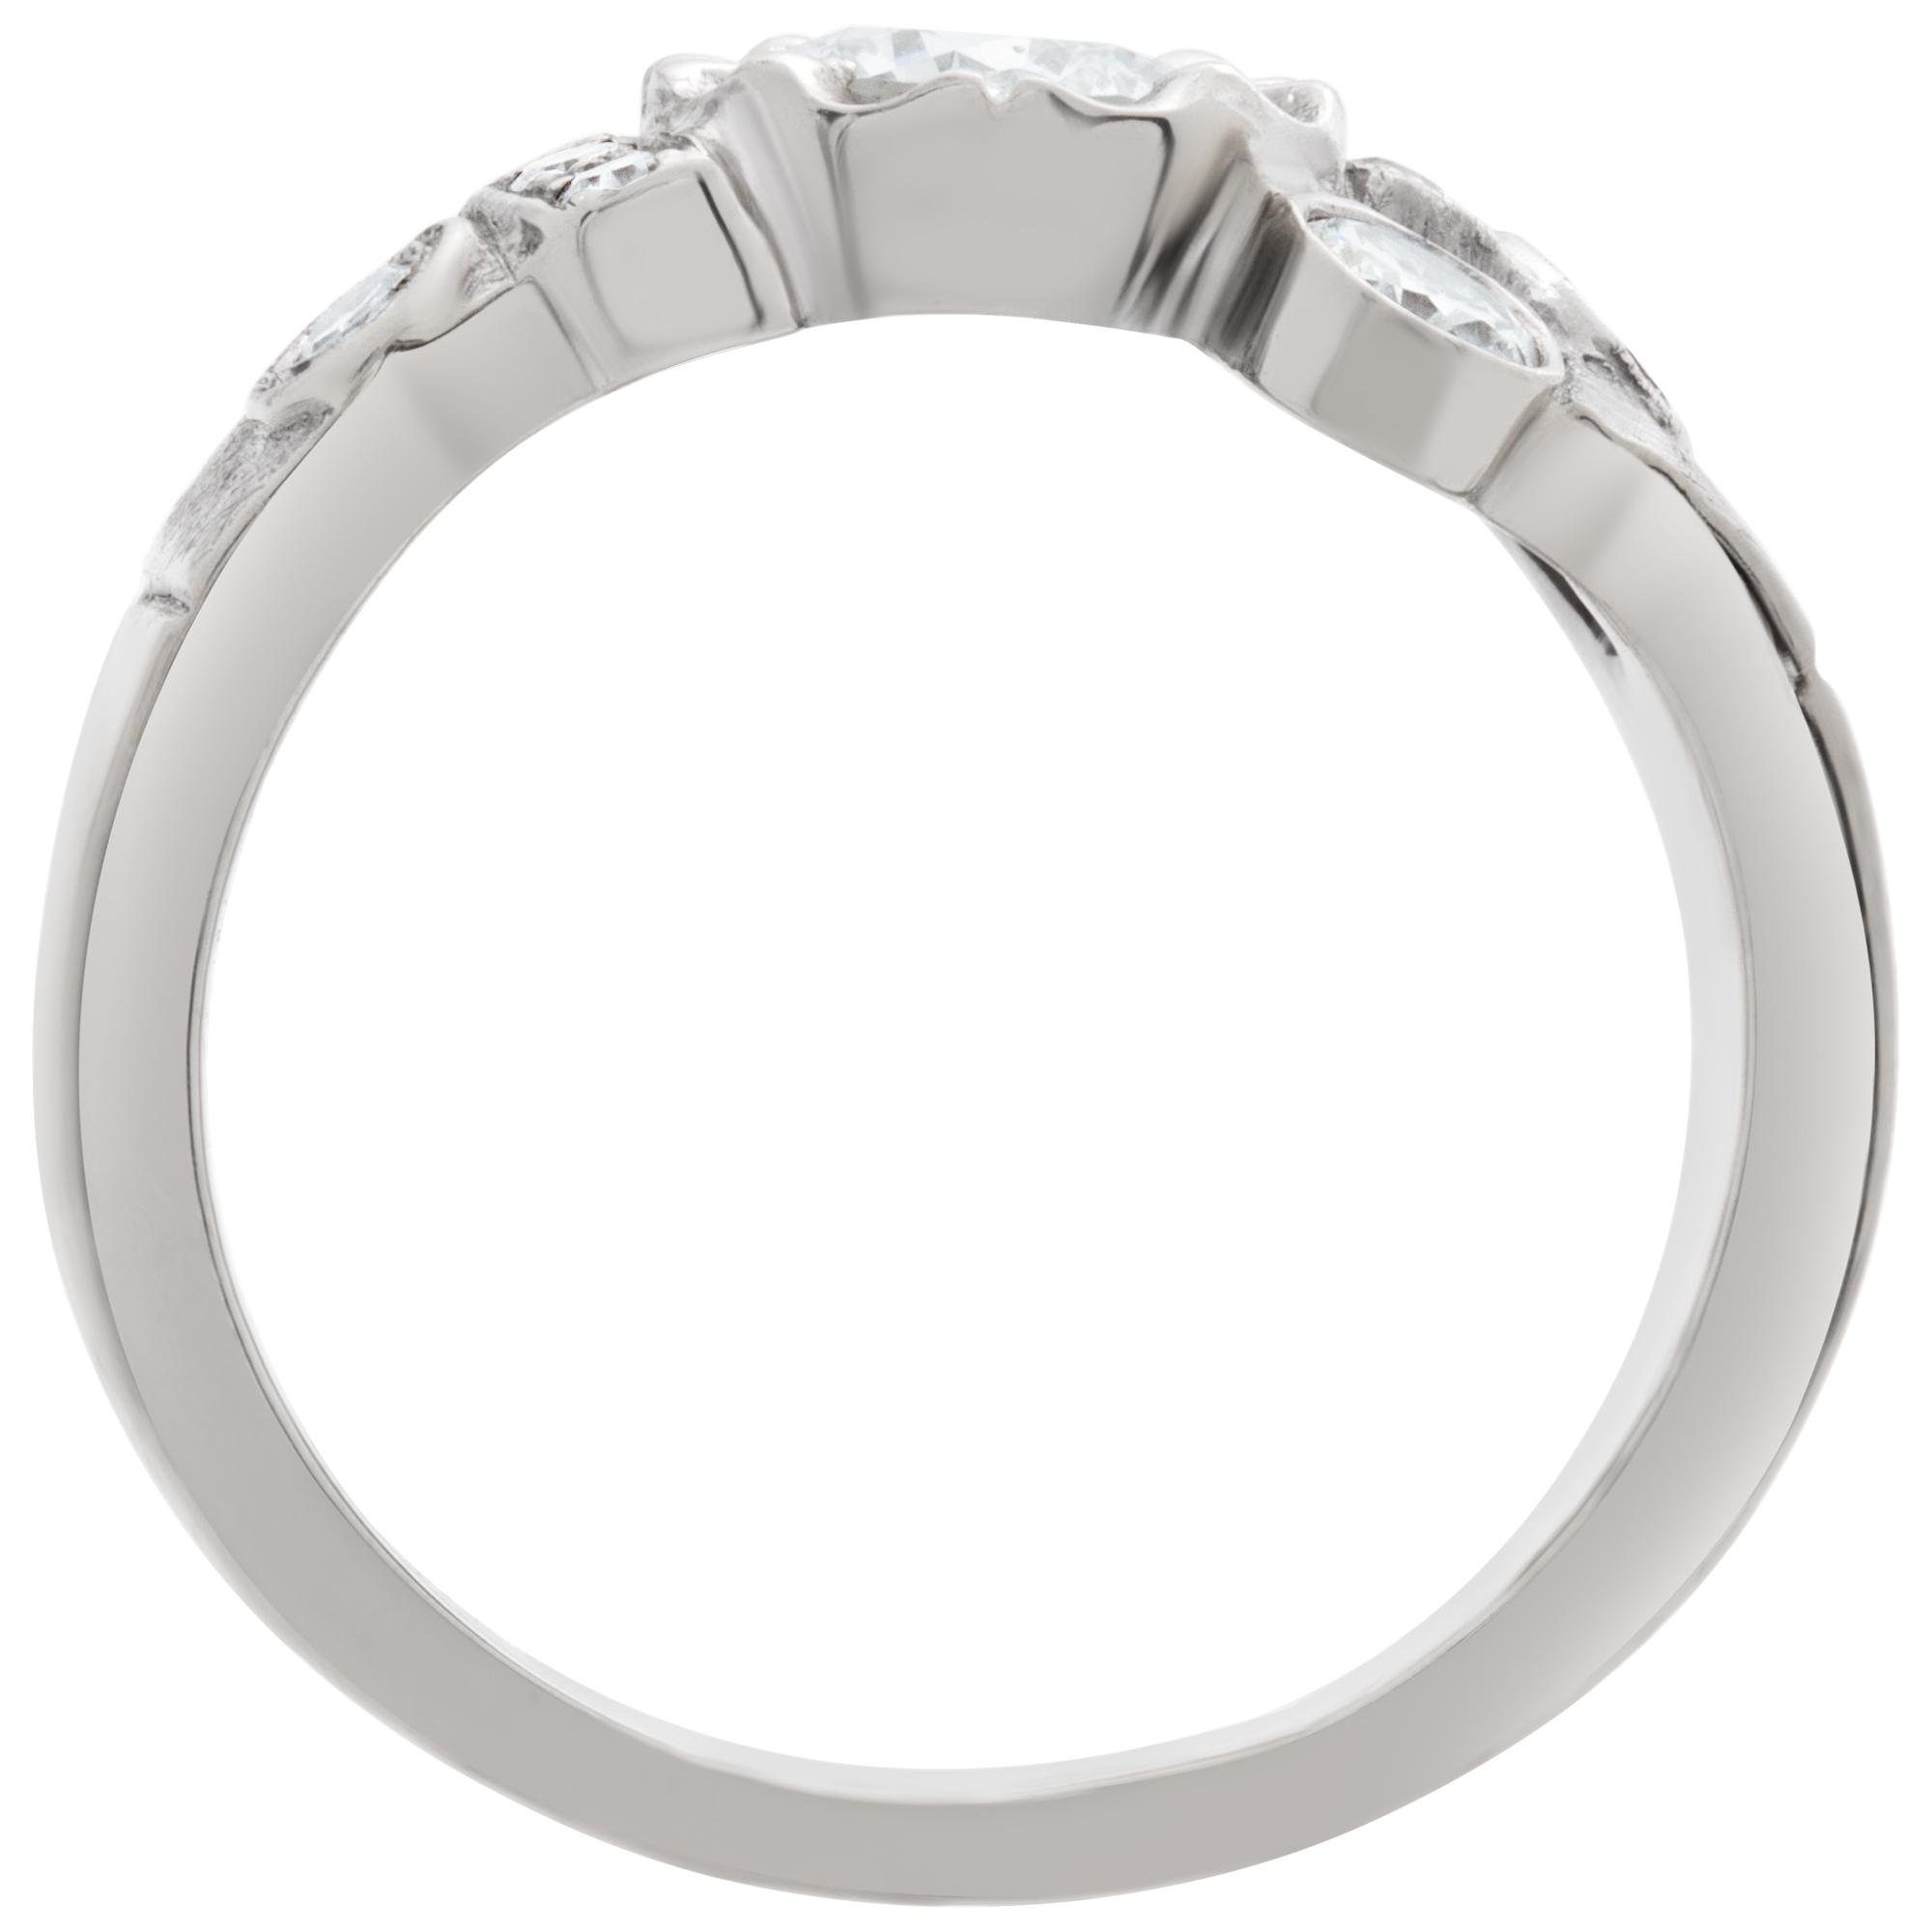 Diamond ring in 14k white gold. 0.80 carats in diamonds. Size 6.25 image 4